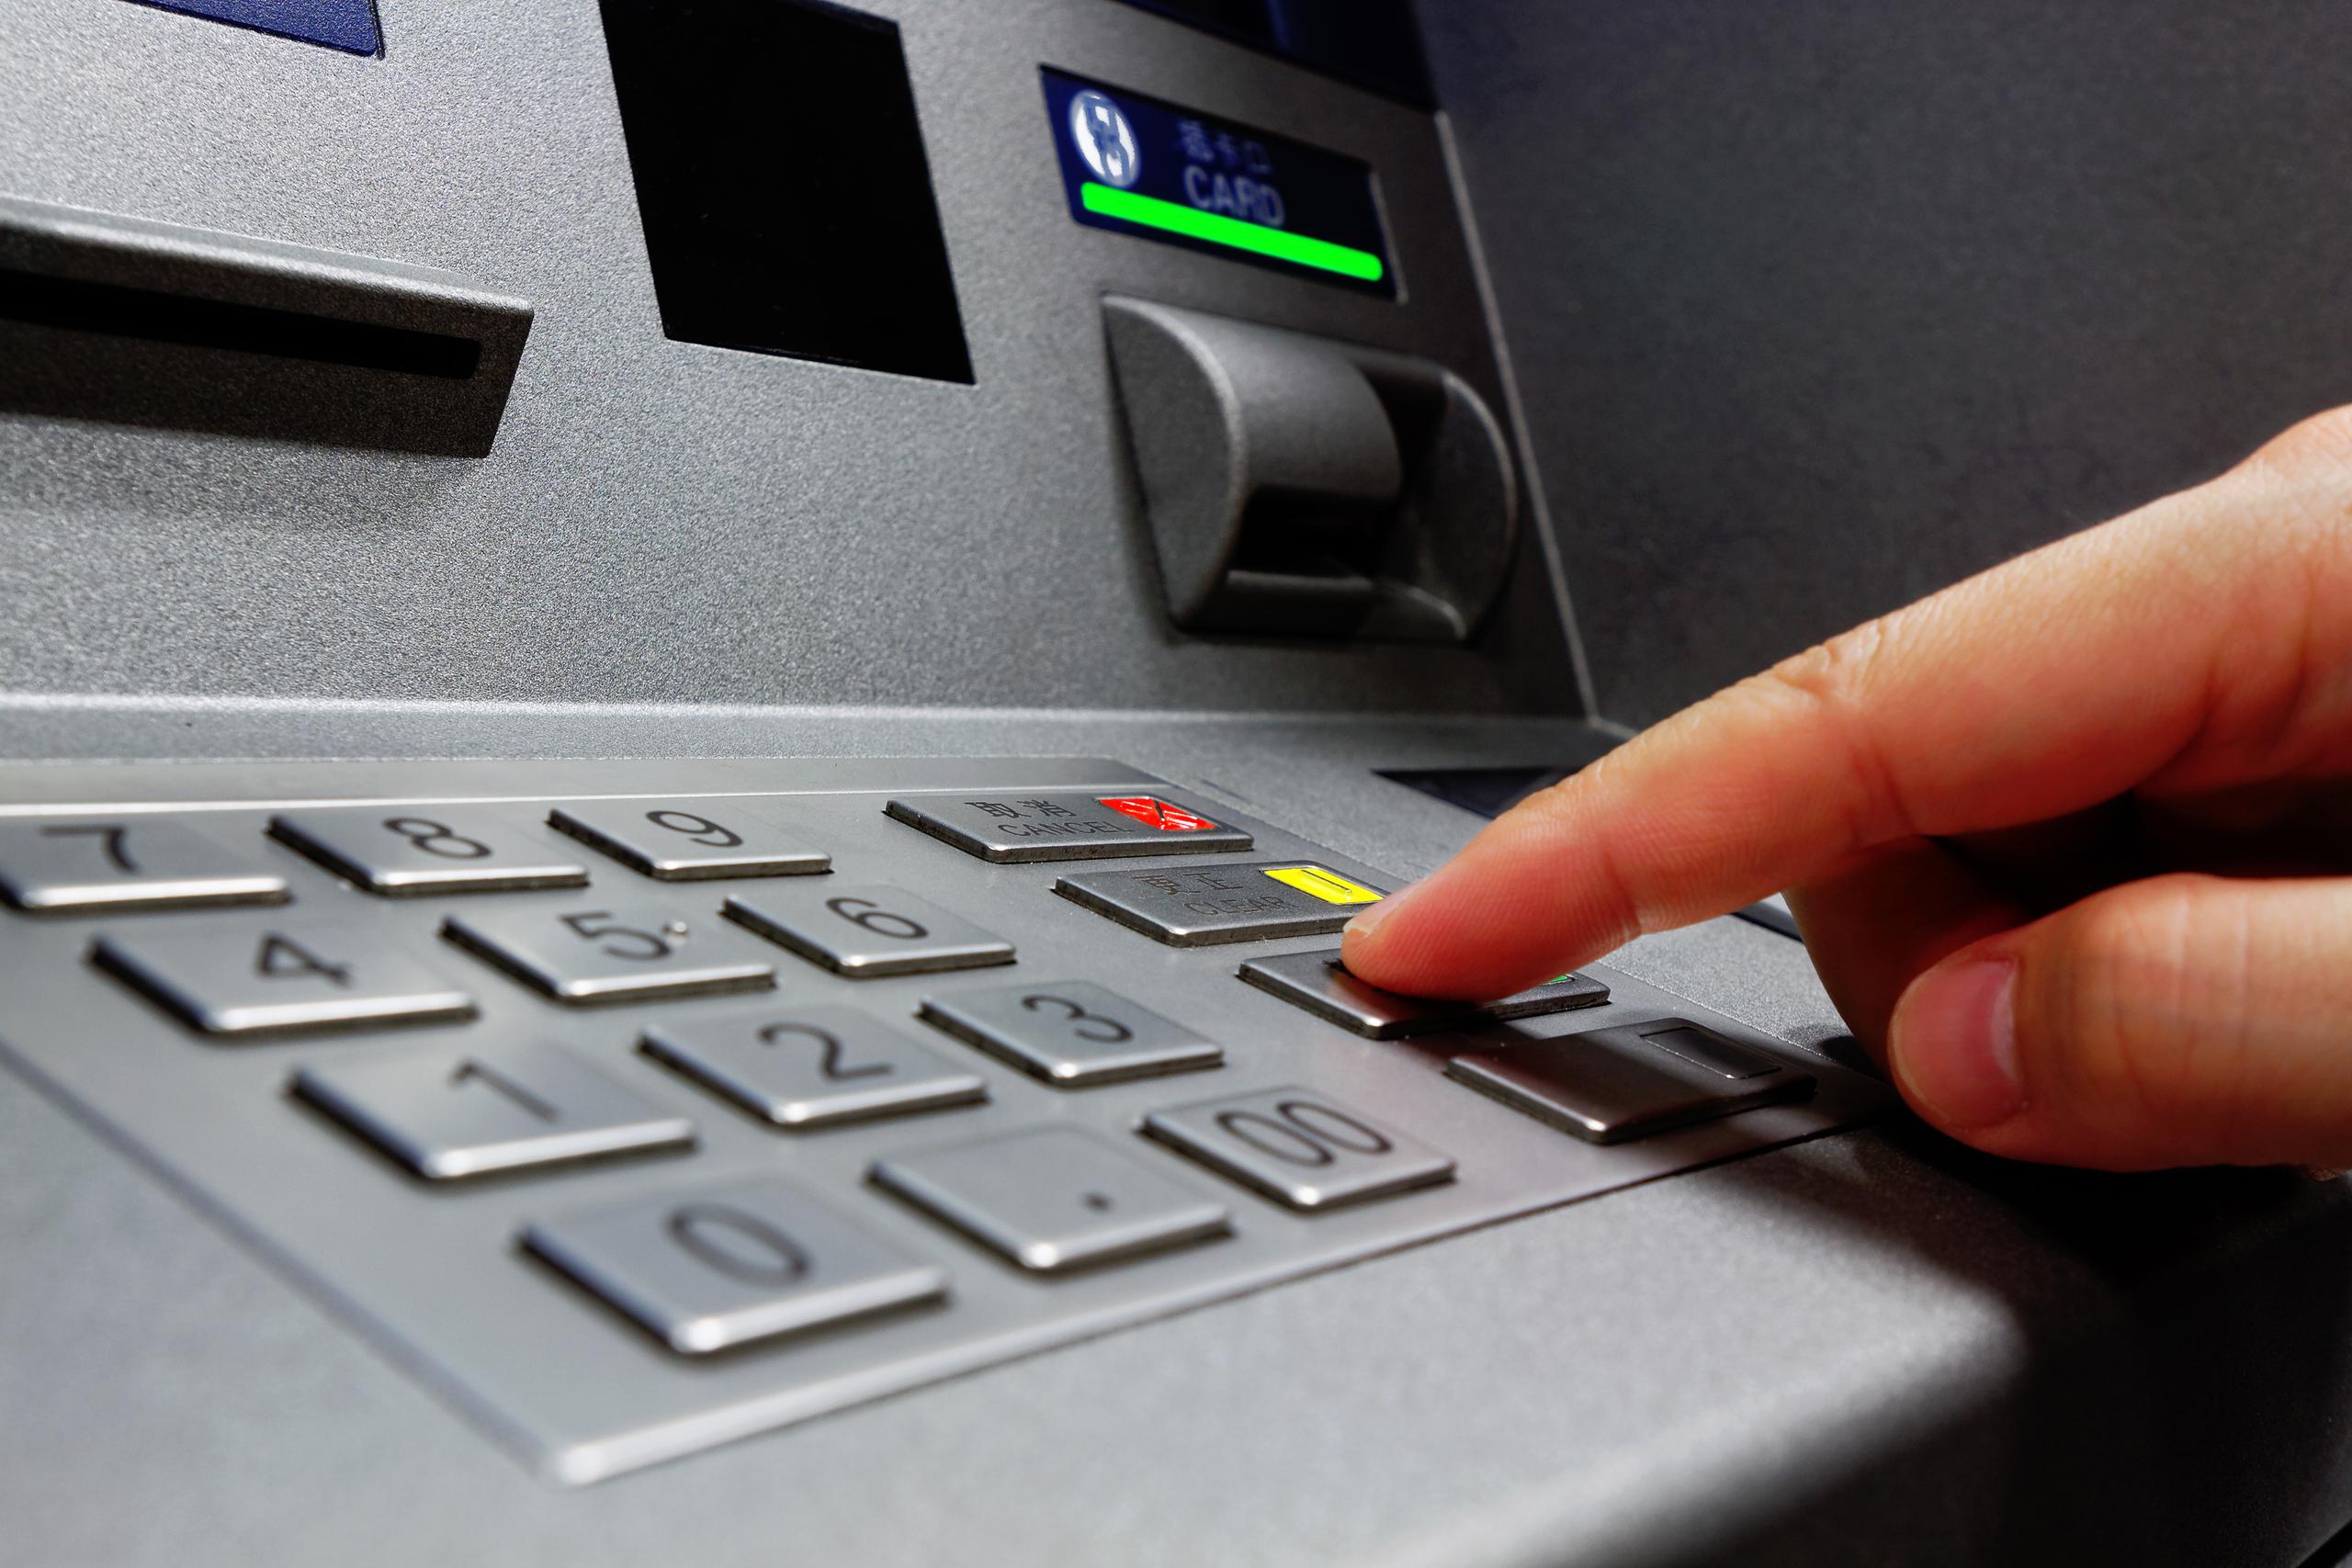 El robo de la máquina de ATM se reportó a las 5:03 a.m. del sábado.